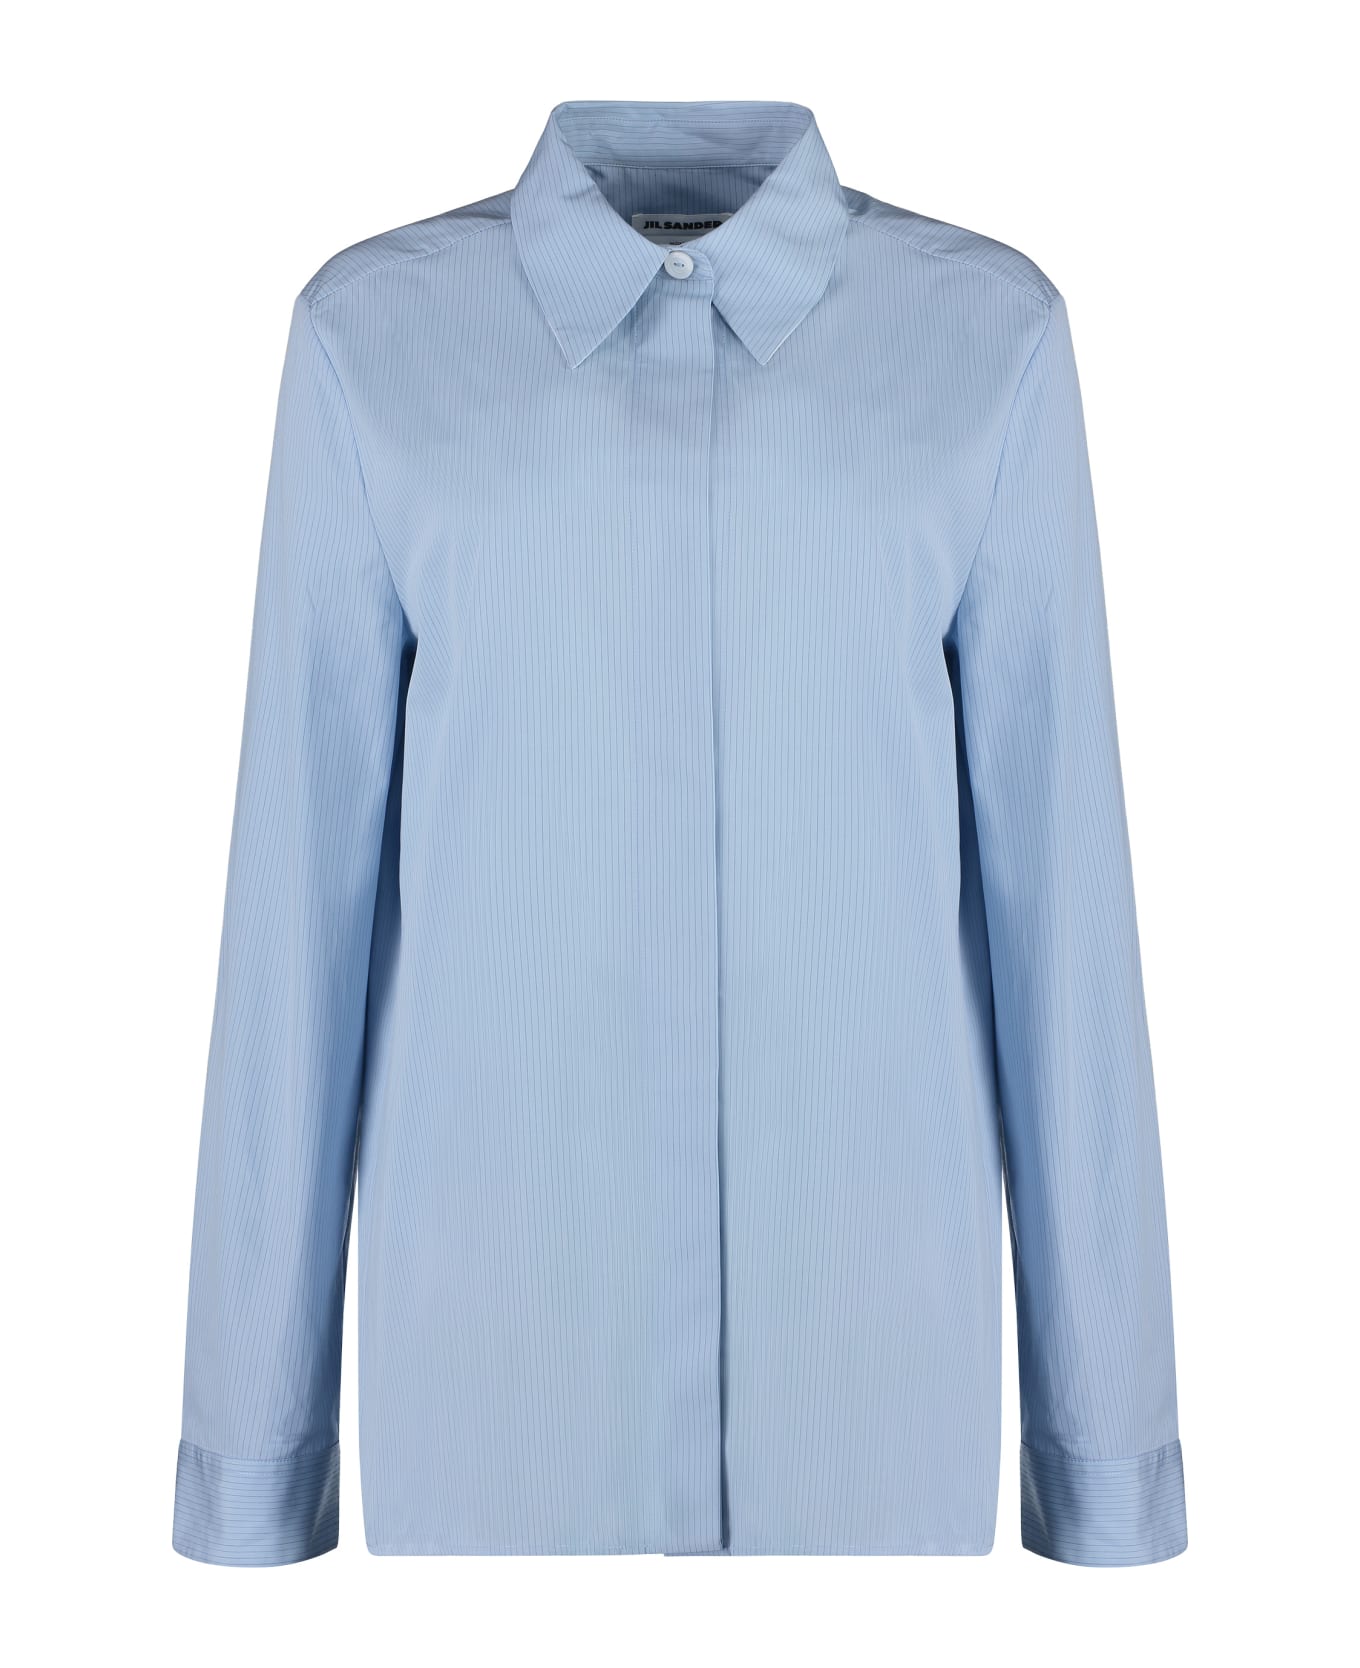 Jil Sander Striped Cotton Shirt - Light Blue